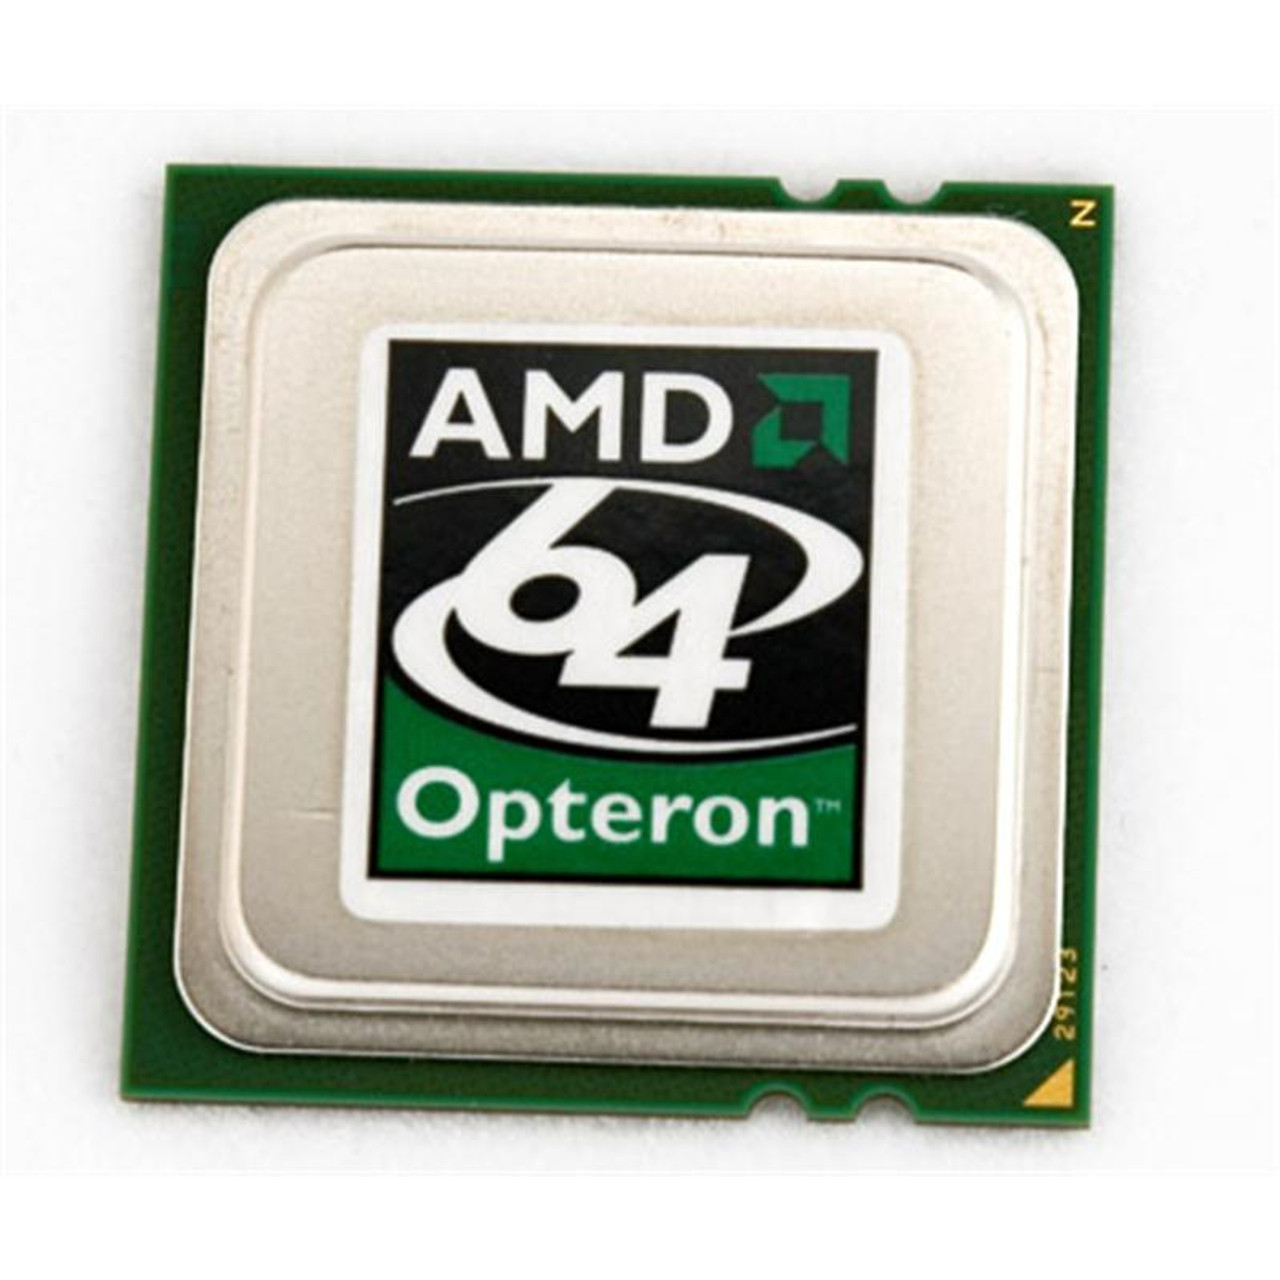 Amd service. Процессор AMD Opteron. AMD Opteron 8354 2.2GHZ Quad-Core (os8354wal4bgh). Процессор AMD Opteron osa 1212iaa6cs. Процессор AMD Opteron 844 Athens.